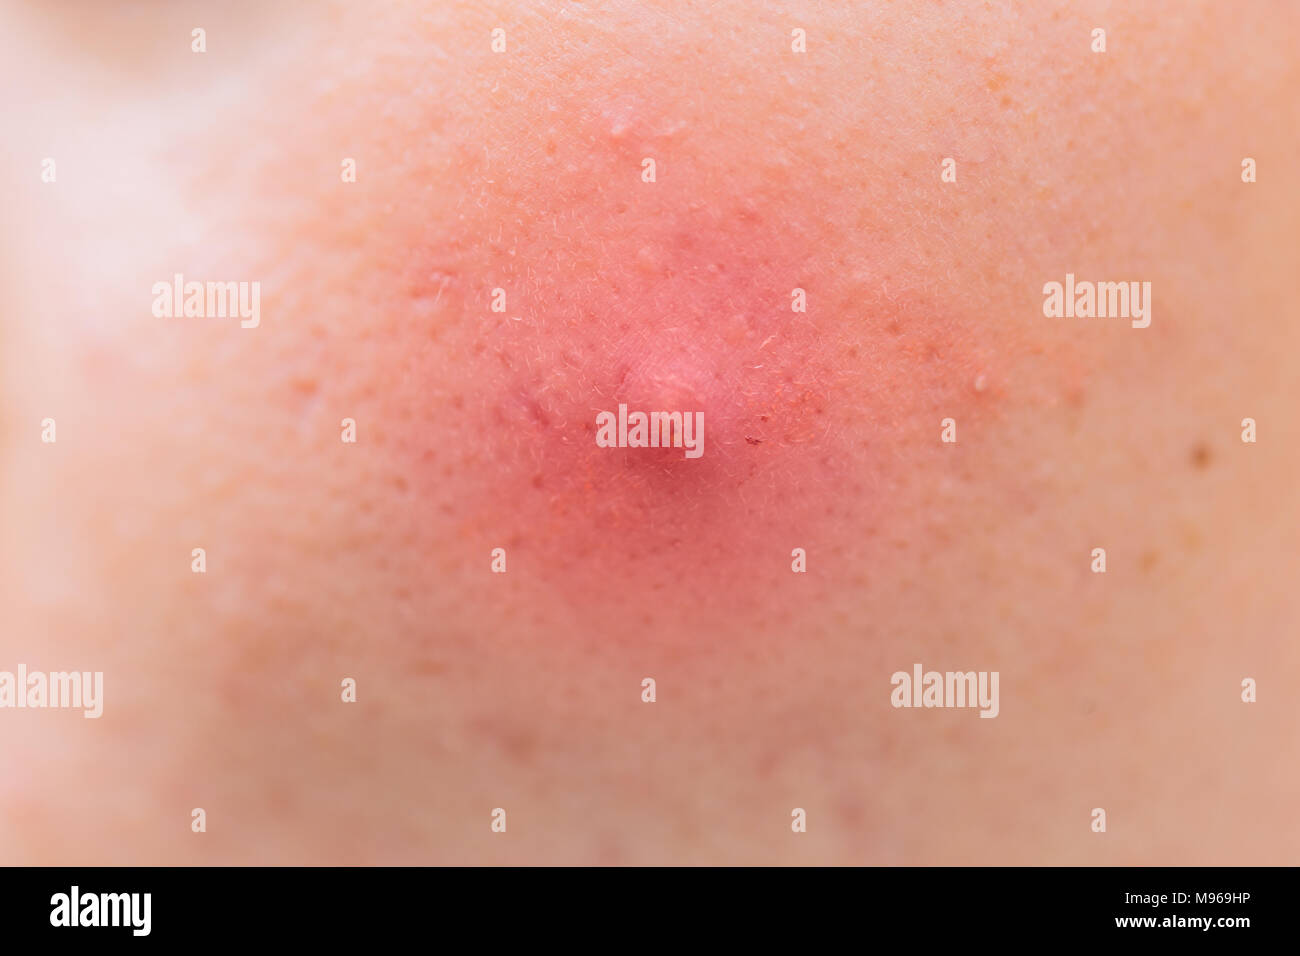 Closeup Big Acne Head skin Inflammation problem Stock Photo